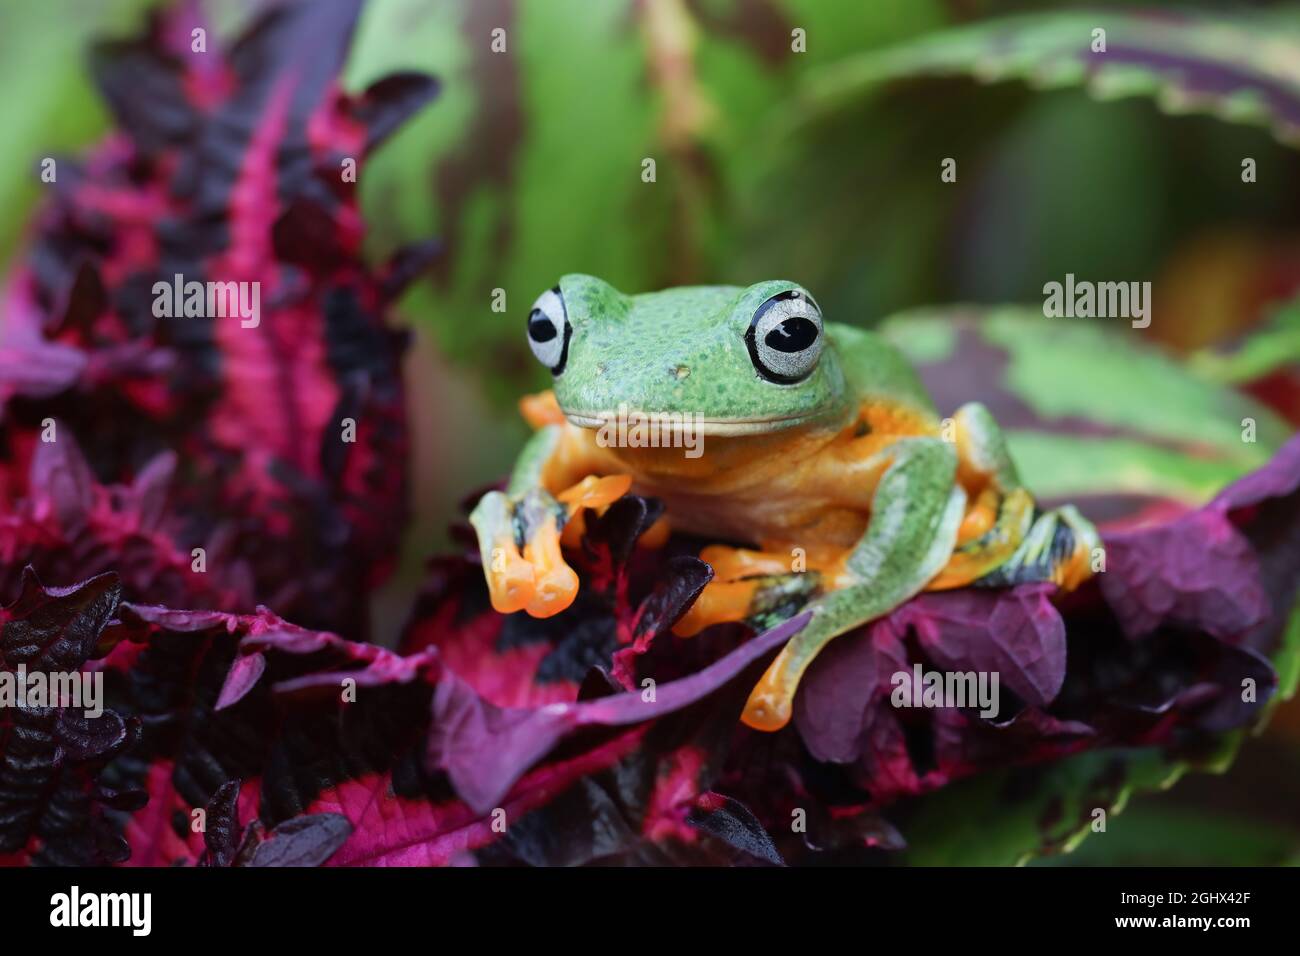 Javan tree frog on a plant, Indonesia Stock Photo